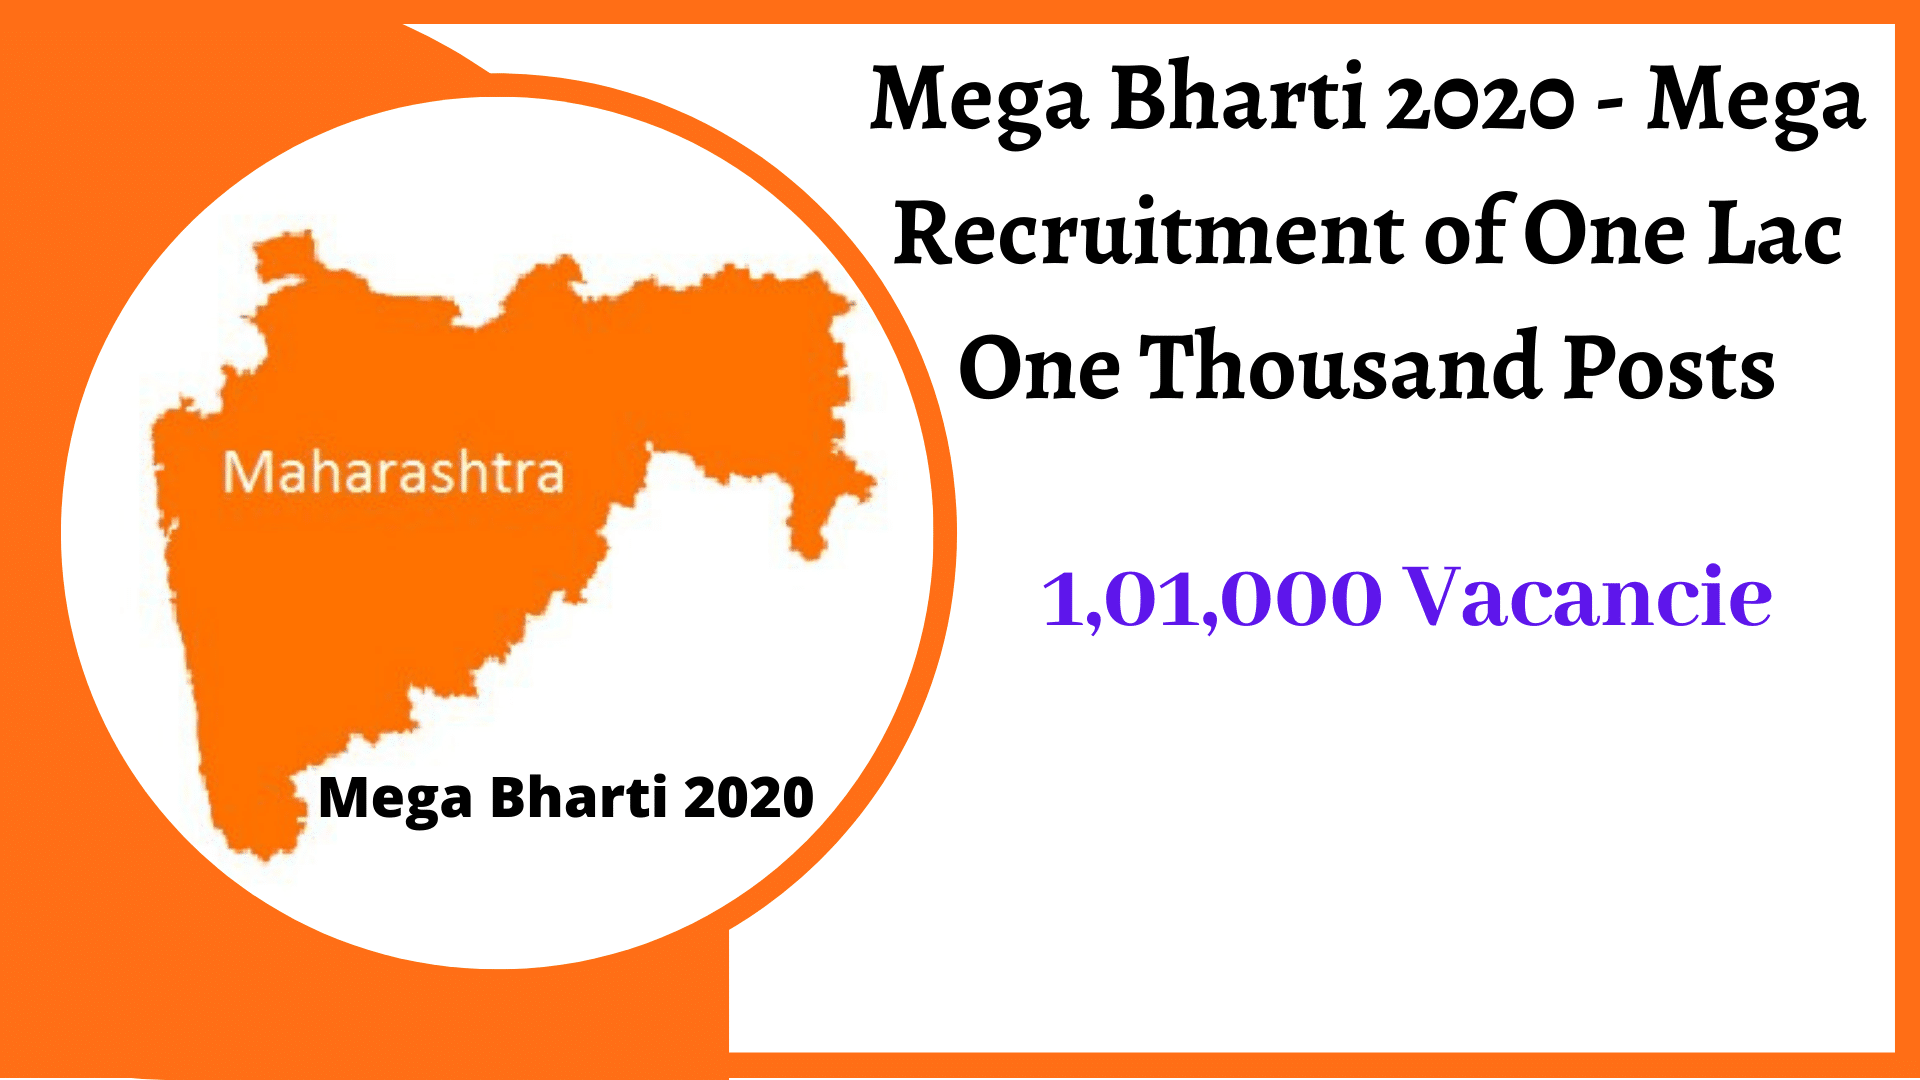 Mega Bharti 2020